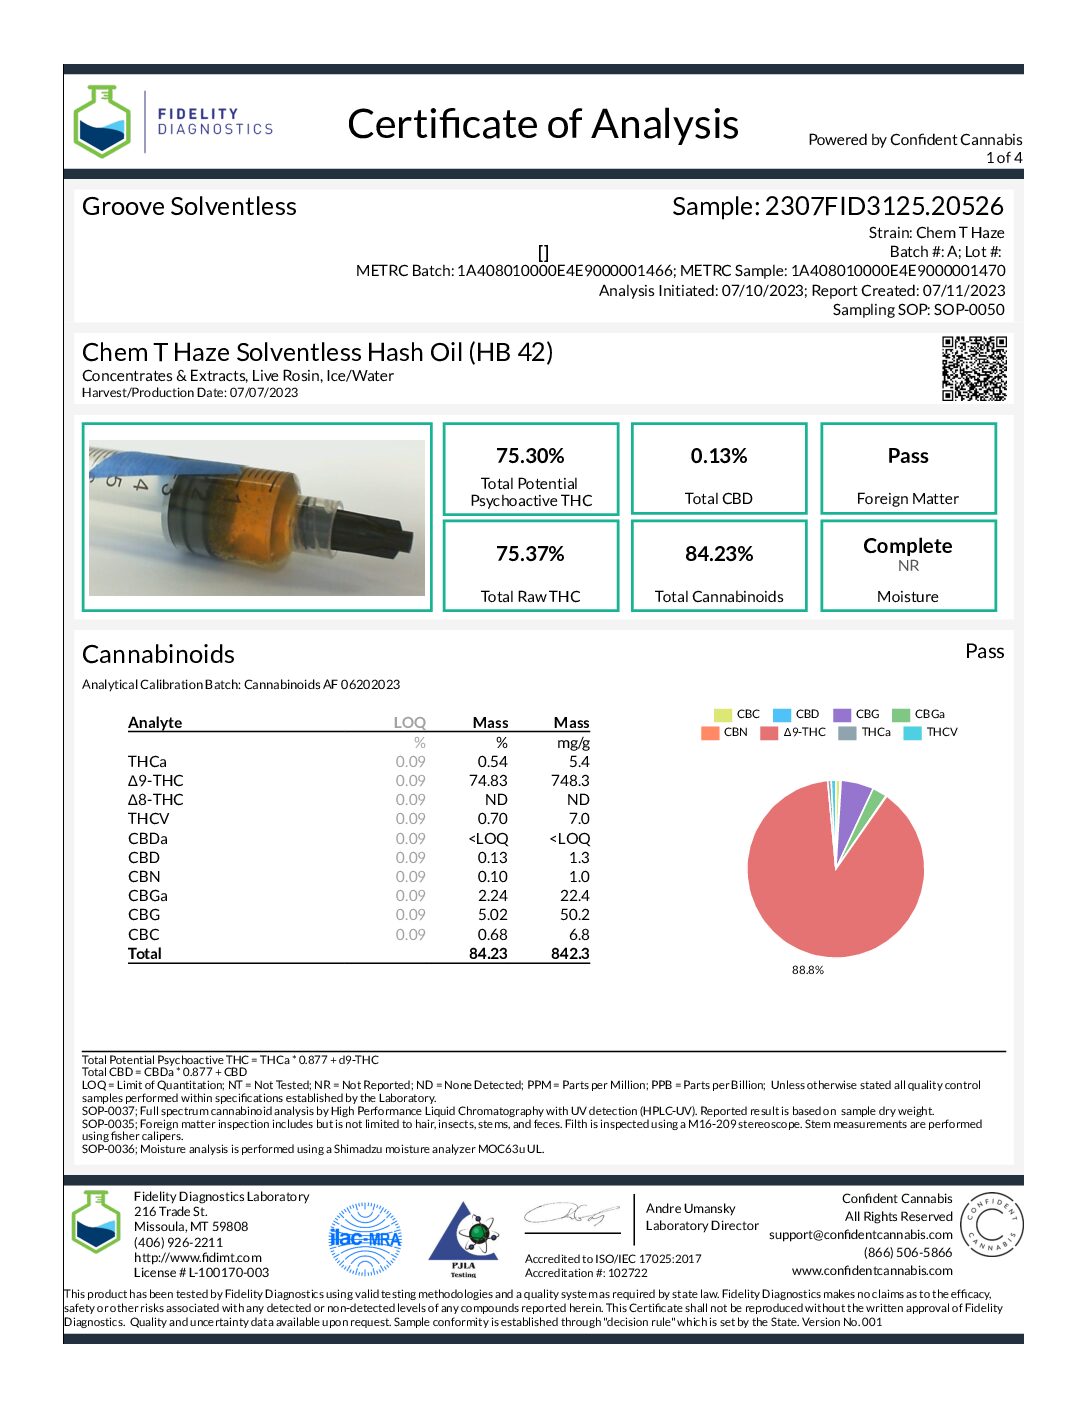 https://groovesolventless.com/wp-content/uploads/2023/07/Chem-T-Haze-Solventless-Hash-Oil-HB-42-1-pdf.jpg